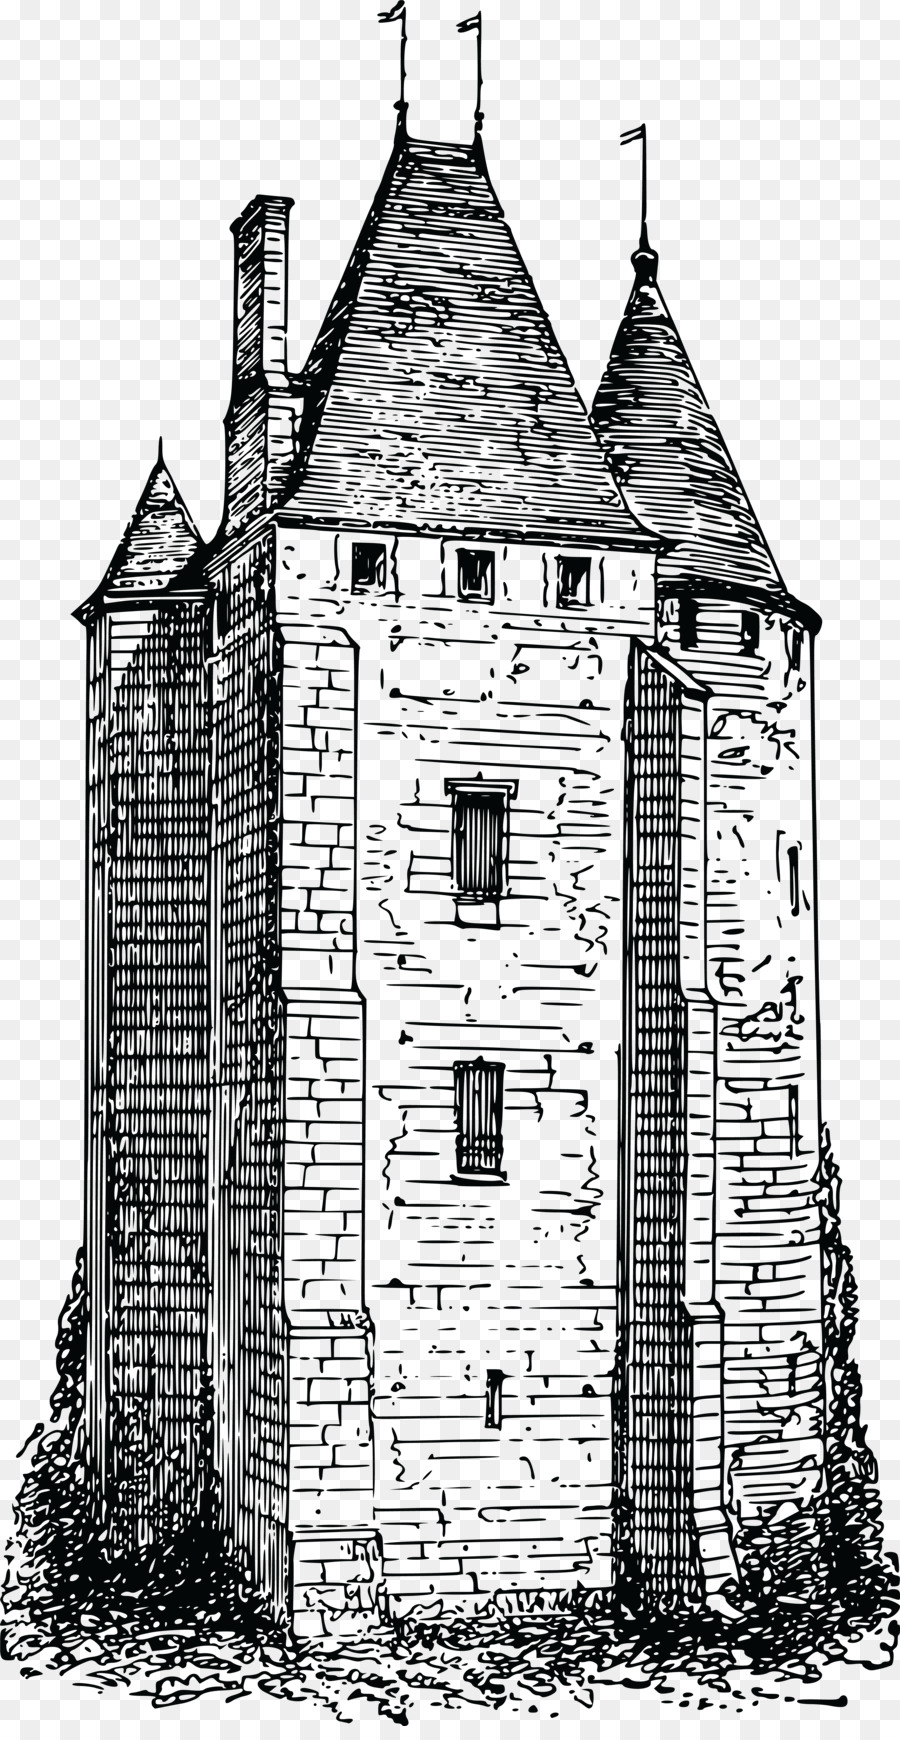 Castle Cartoon clipart